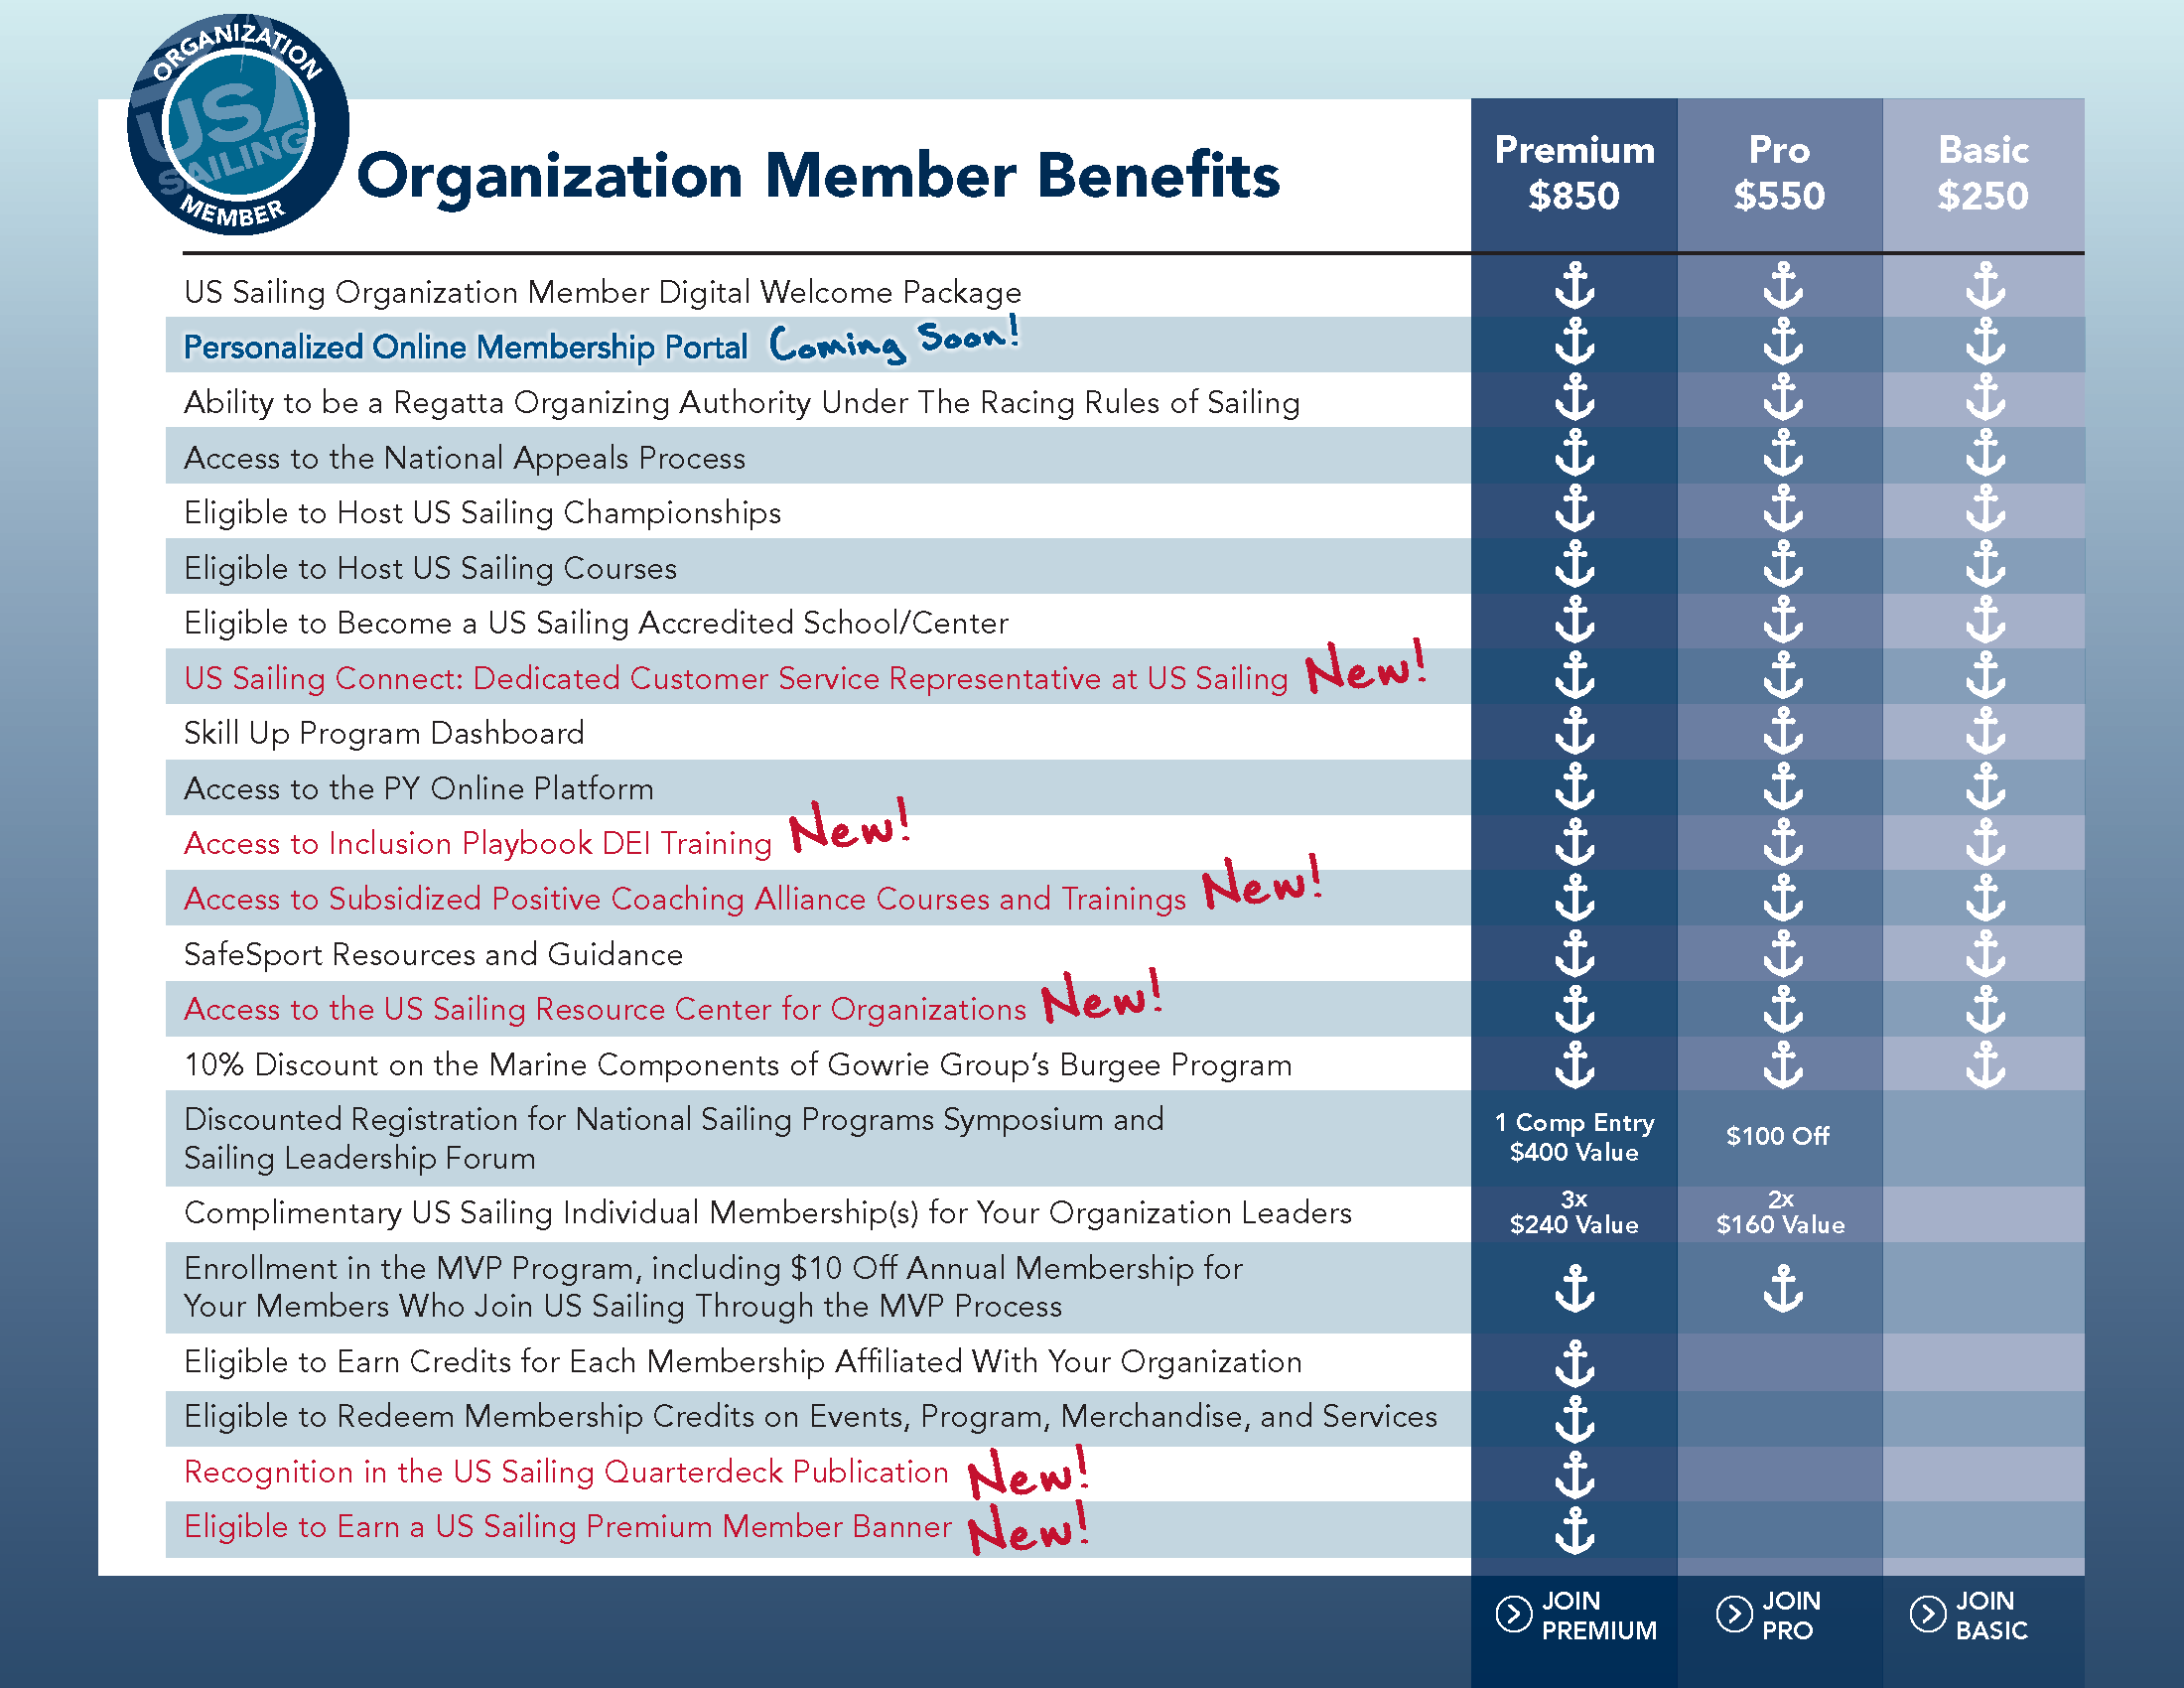 Organization Member Benefits